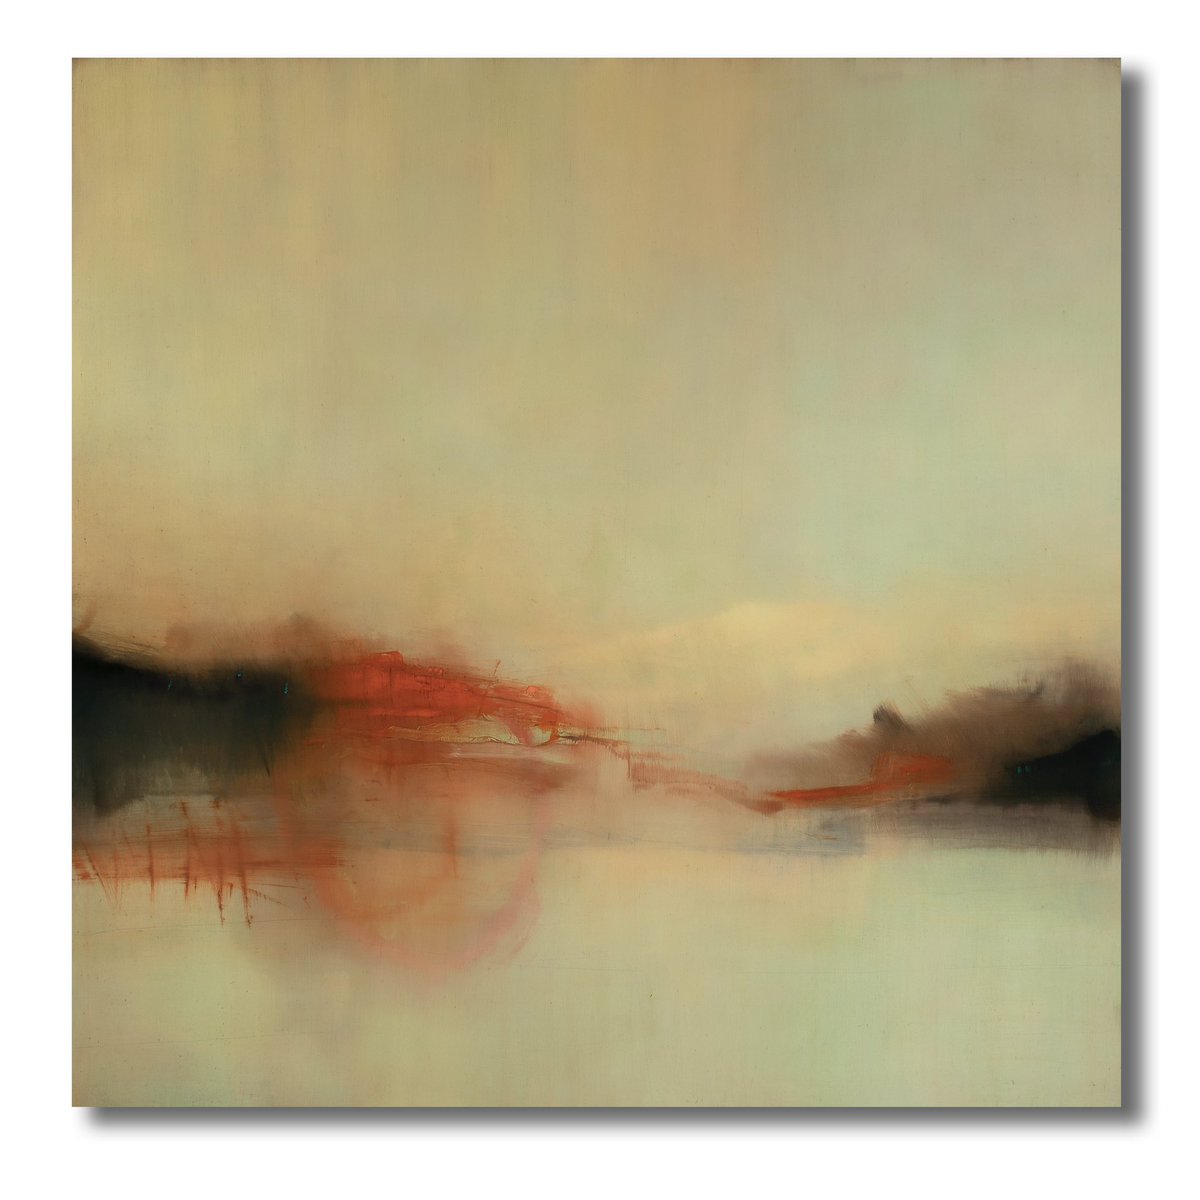 ‘Crossing Headlands’
Oil on canvas
160x160cm

#cossingheadlands #landscapepainting #abstractlandscapepainting #paintingoftheday #orange #light